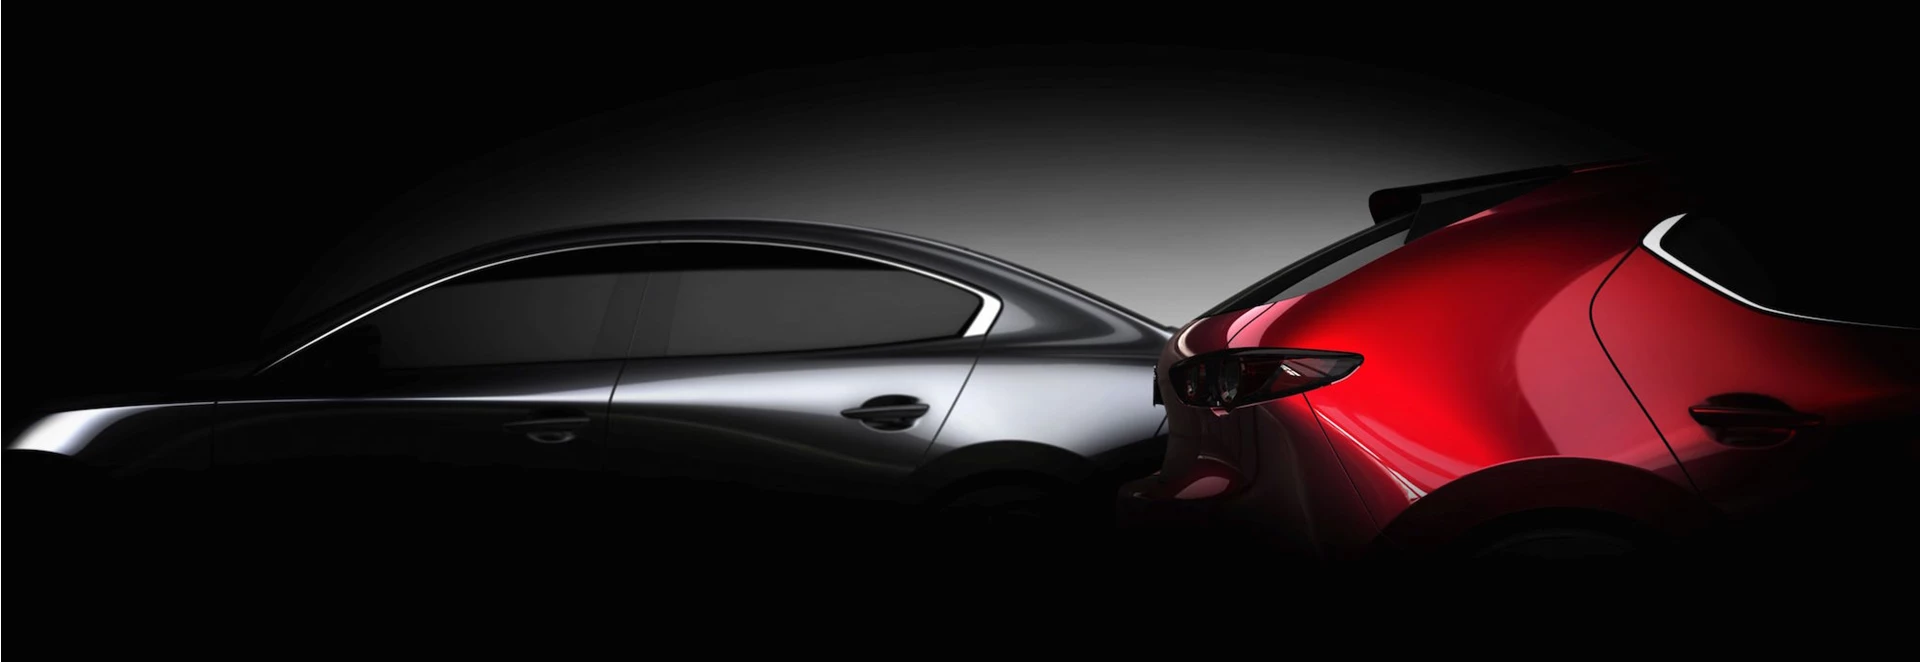 2019 Mazda3 teased ahead of LA motor show reveal 